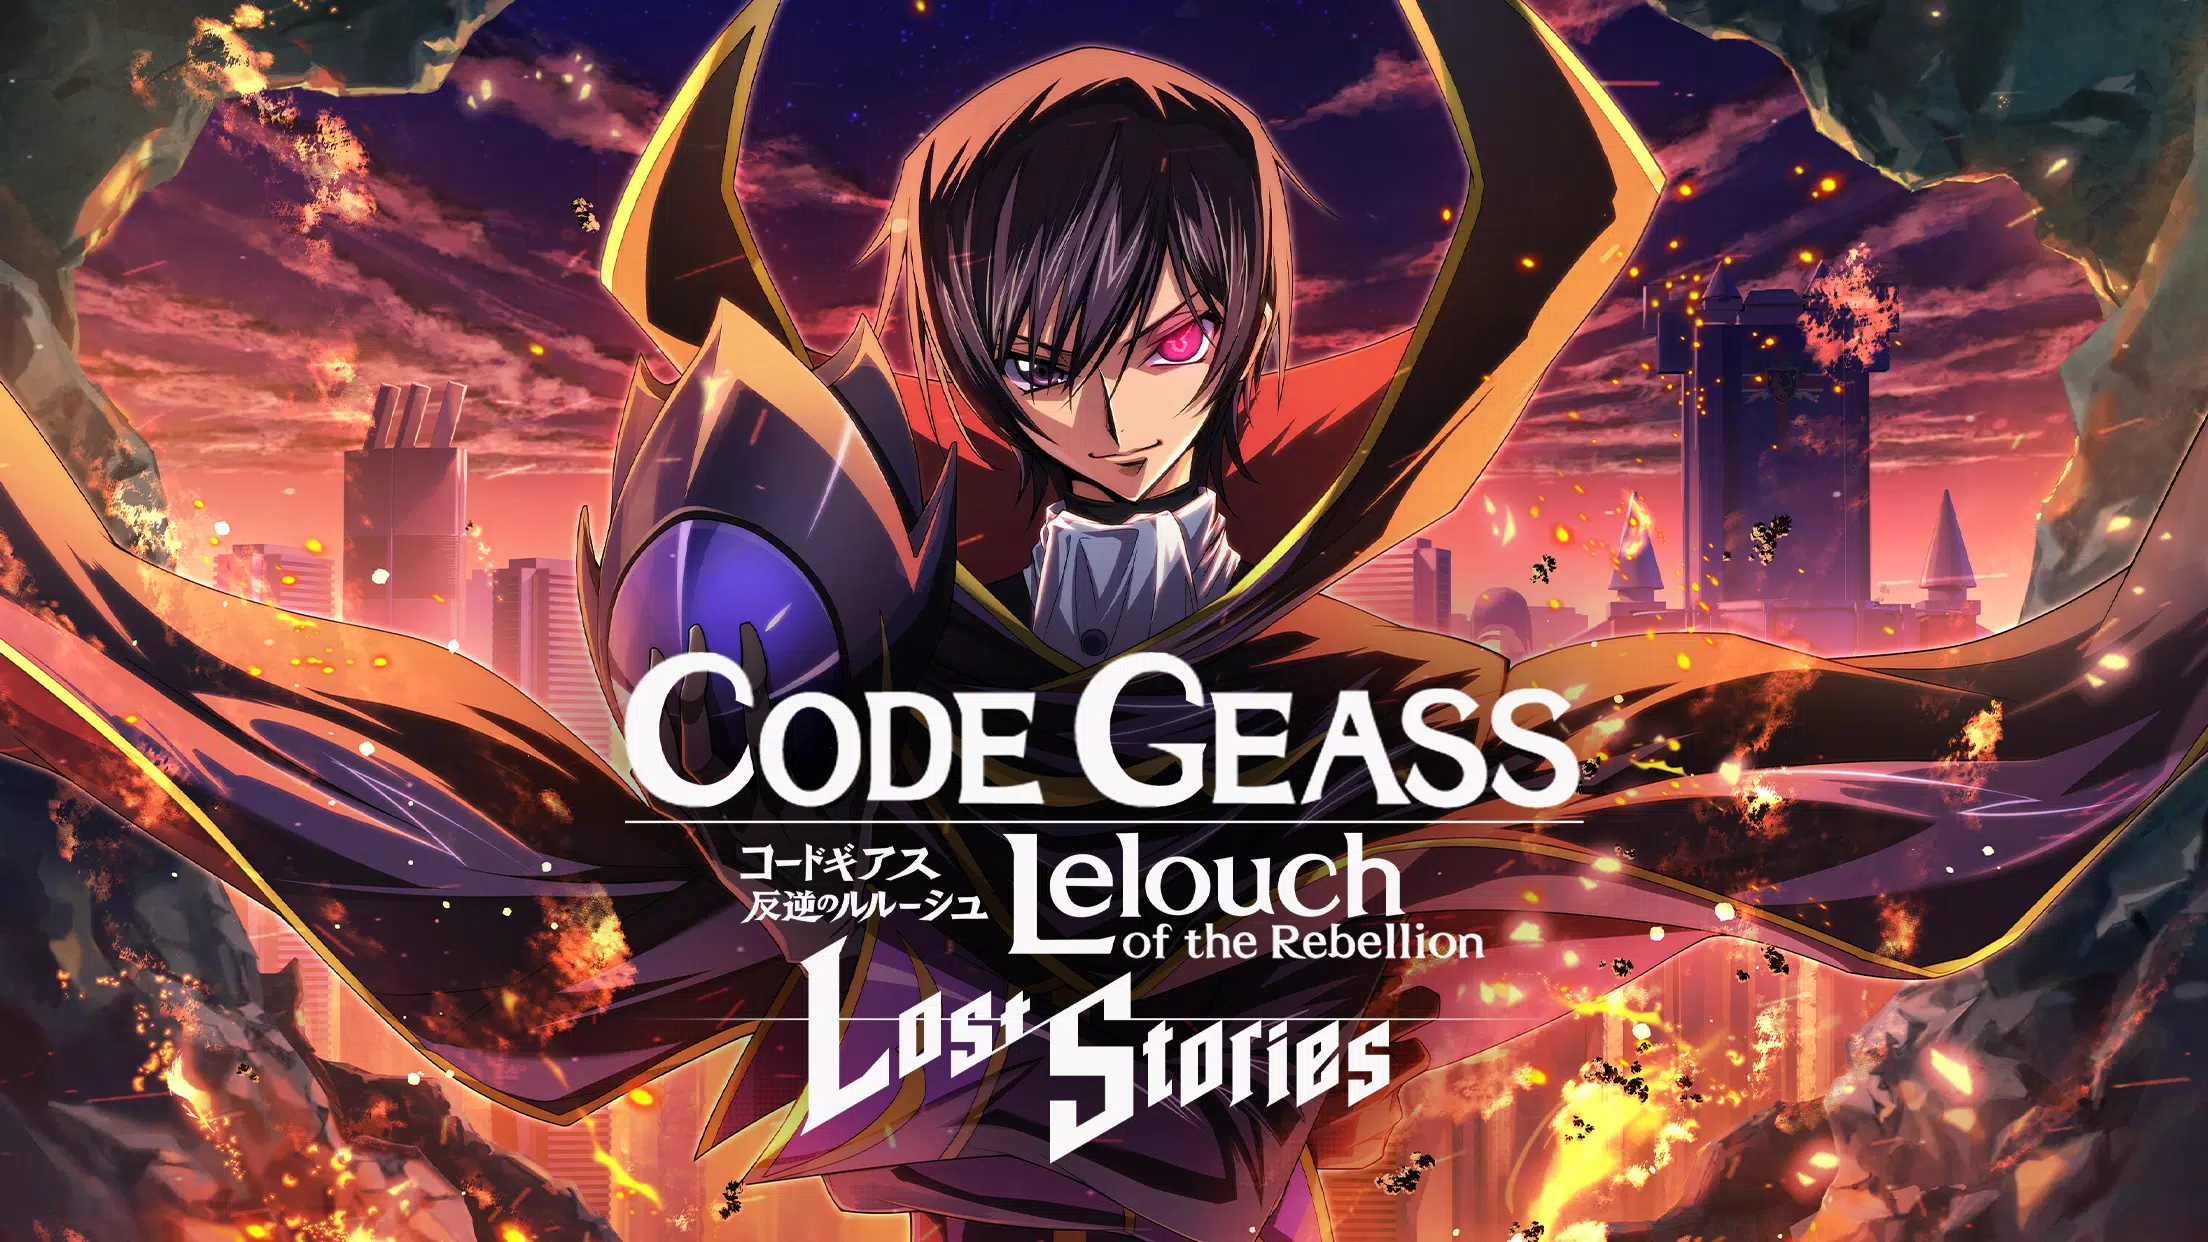 Lista de personagens de Code Geass - Lelouch of the Rebellion